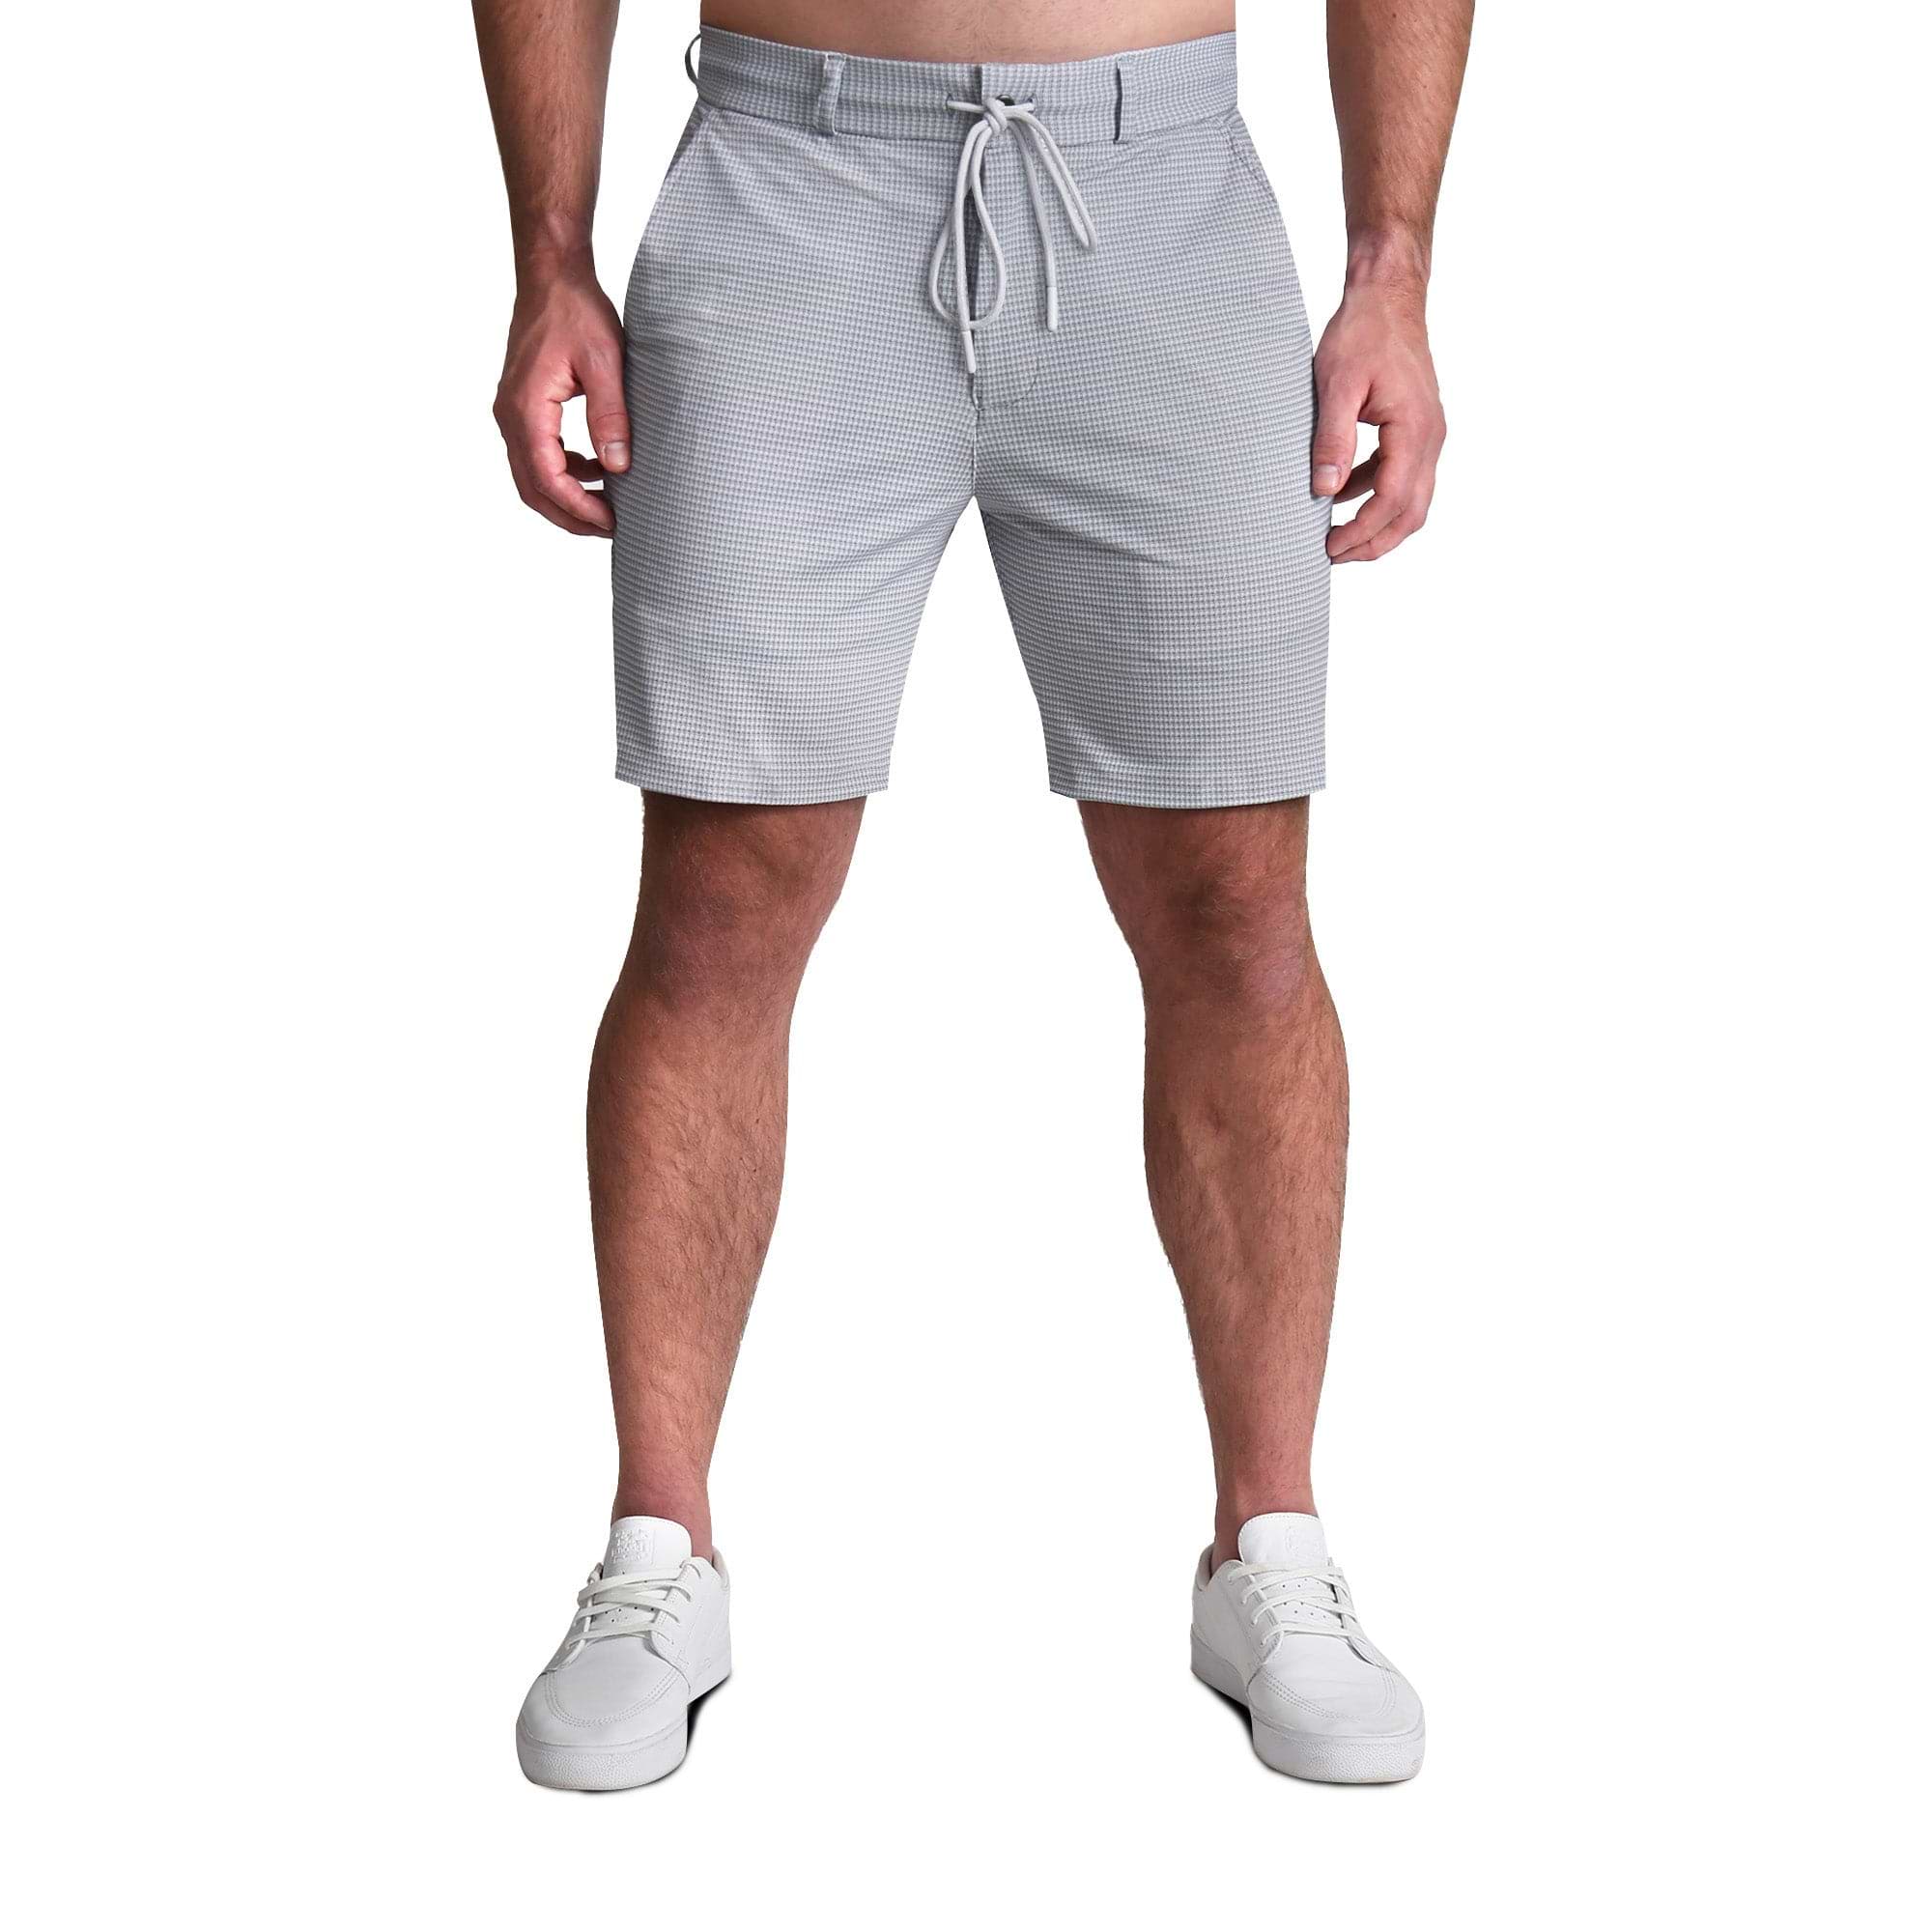 Athletic Fit Drawstring Shorts - Grey Houndstooth